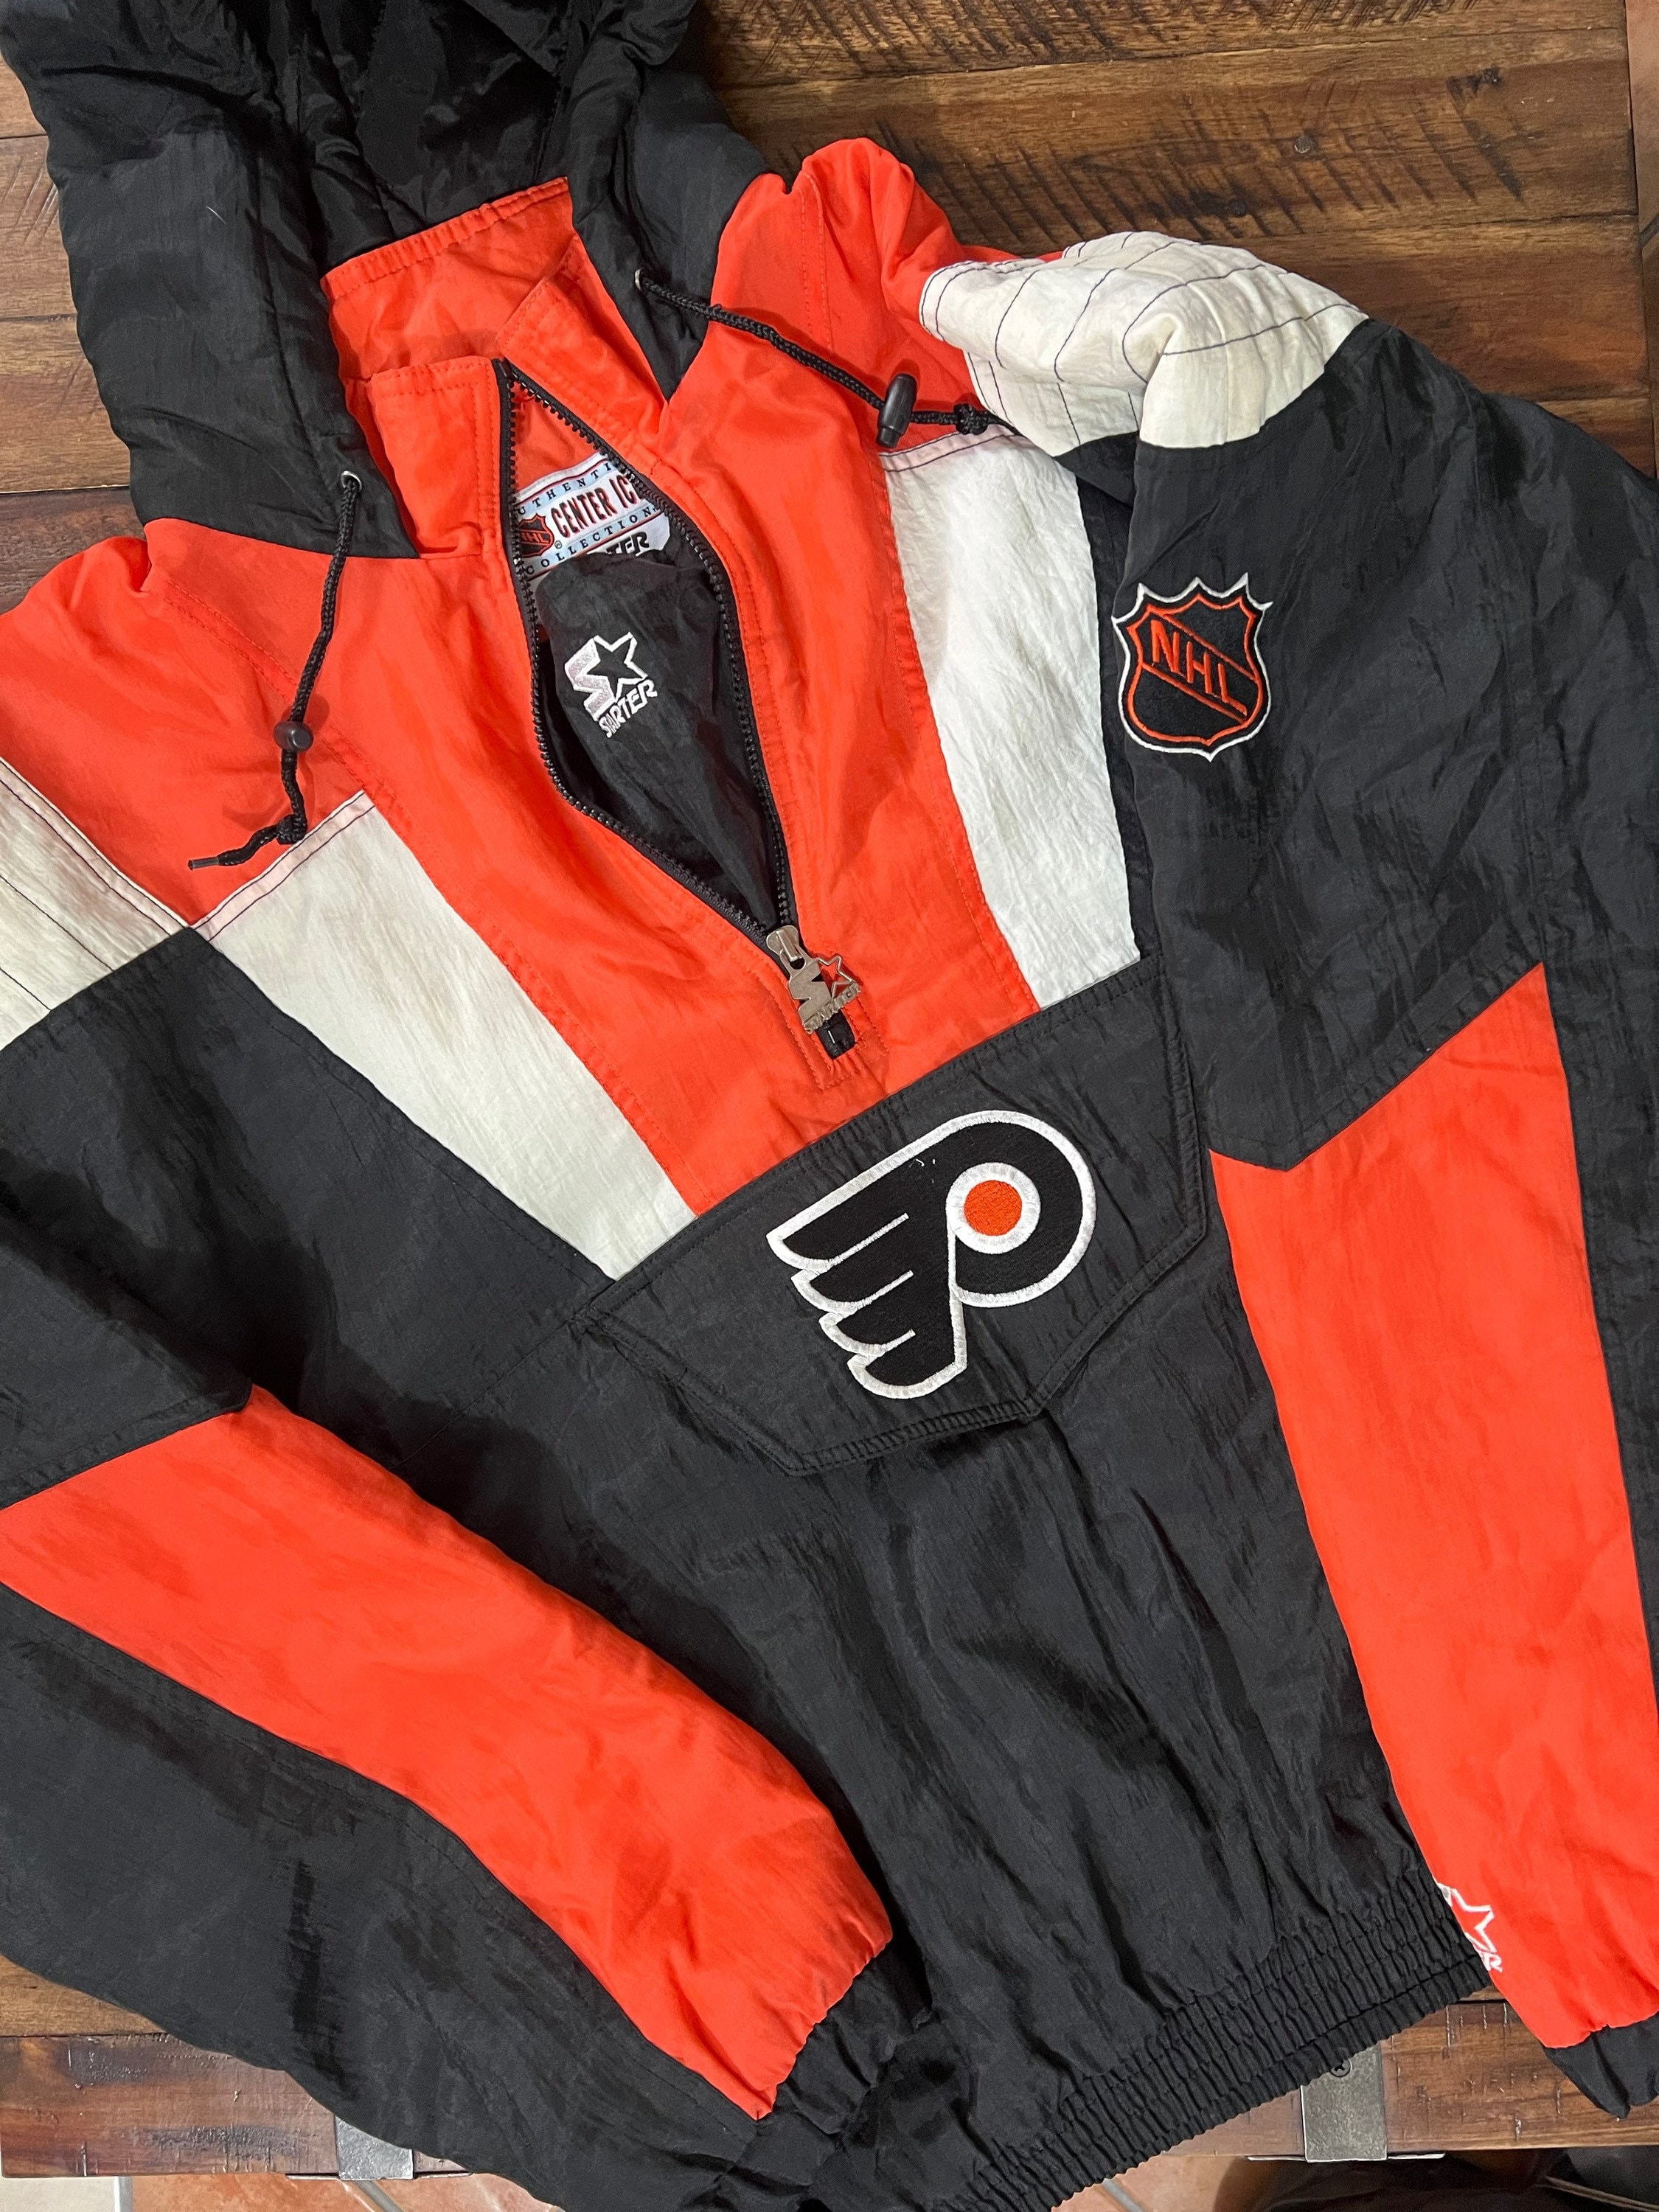 Vintage 80s Chicago Blackhawks Starter Jacket Size Medium -  Hong Kong